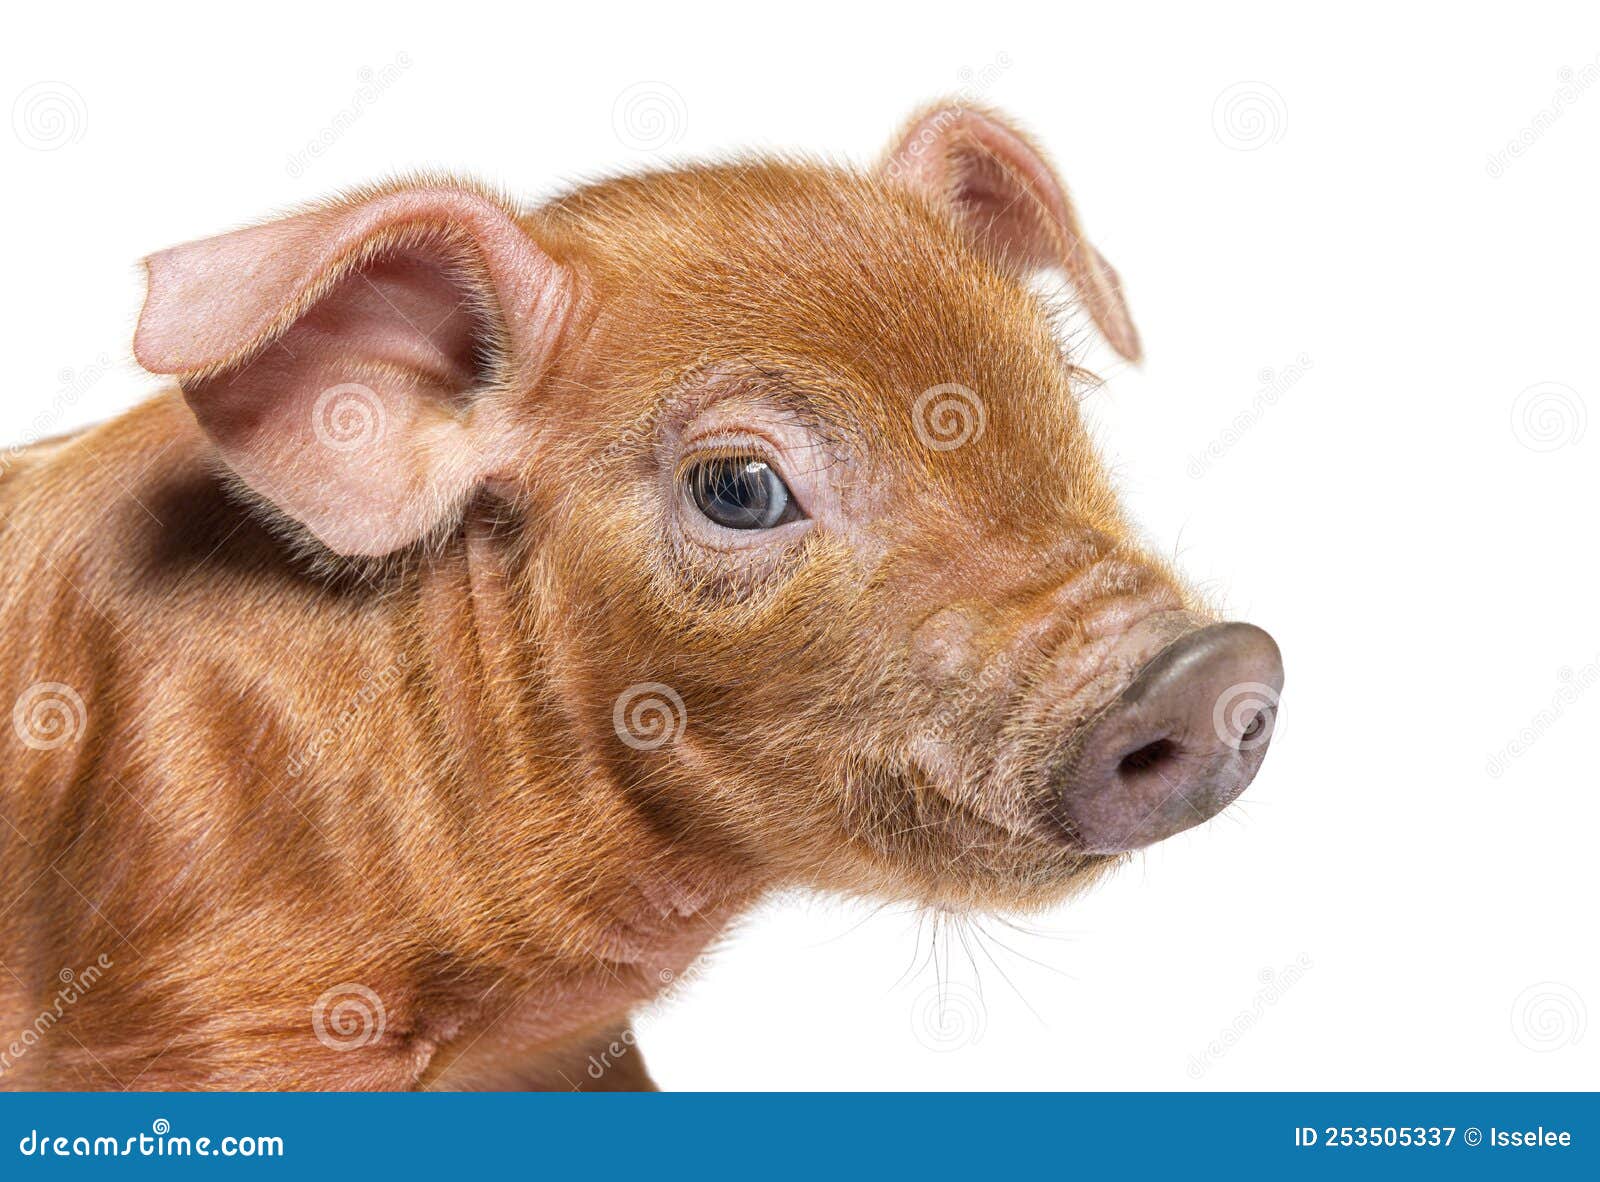 portrait close-up of a young pig head mixedbreed